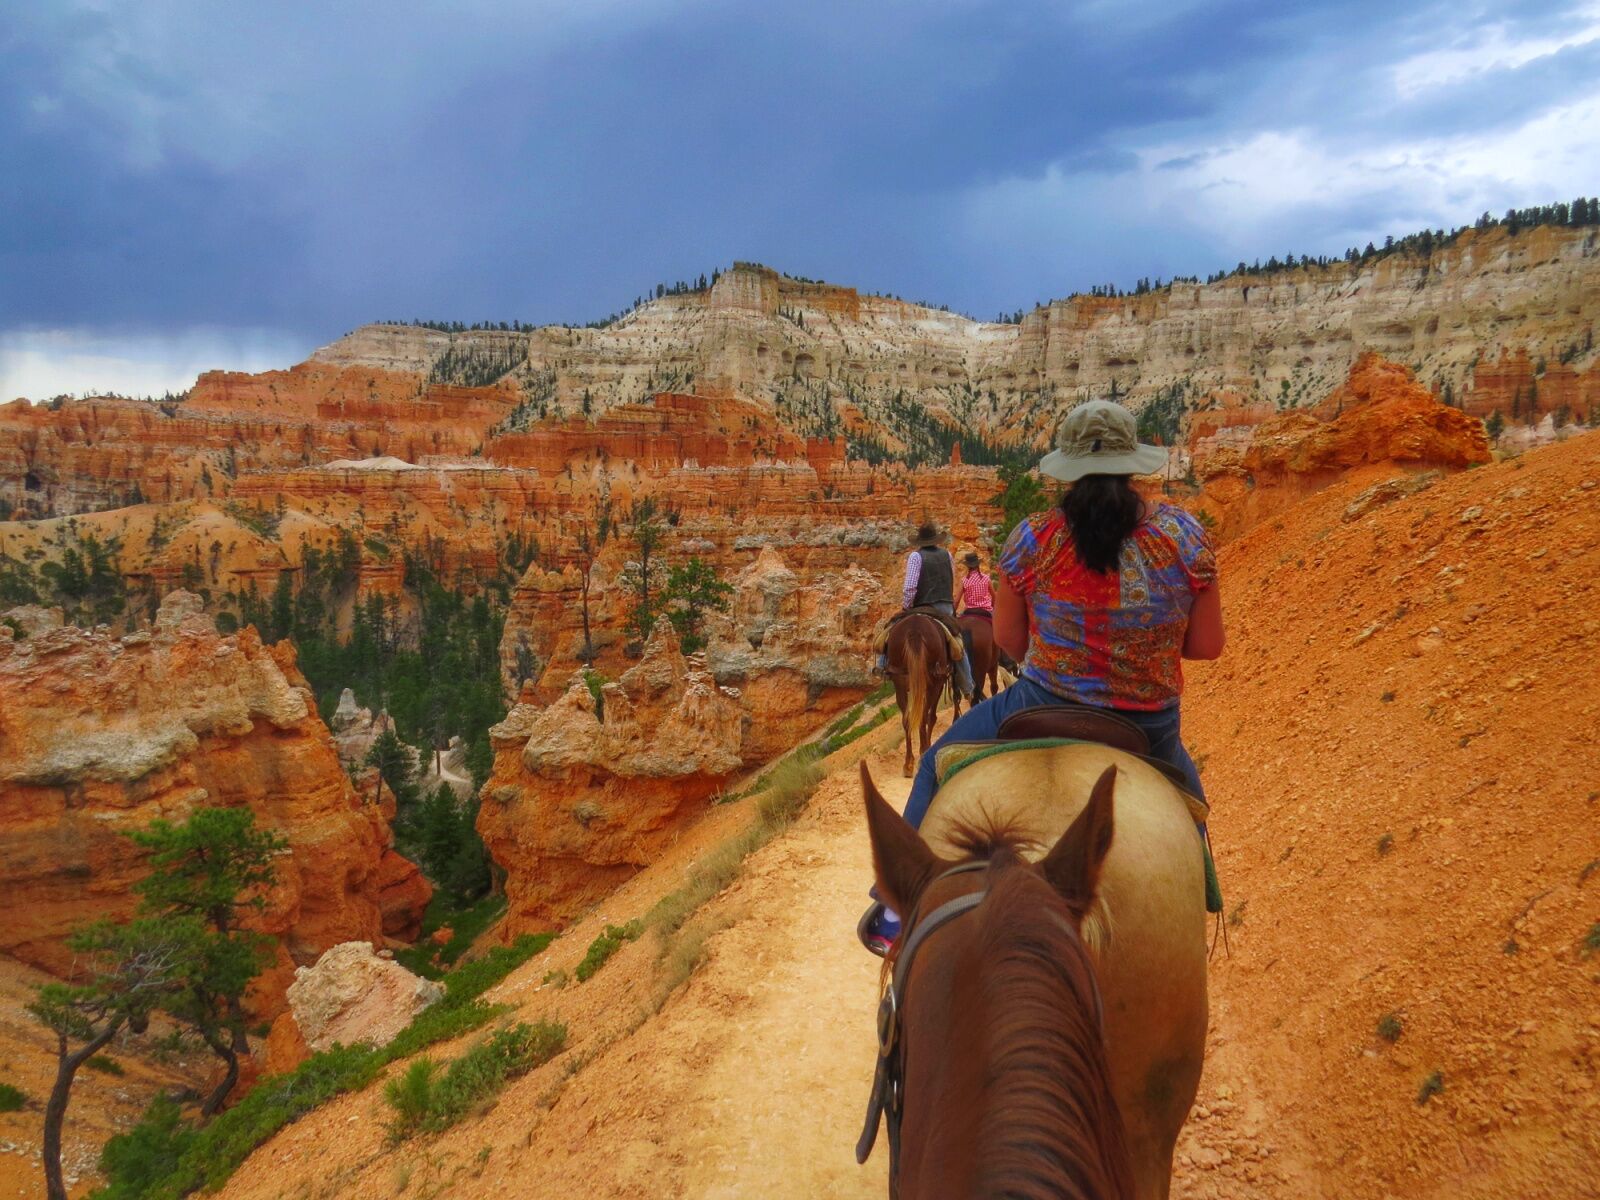 bryce canyon vs zion - horseback ride in bryce